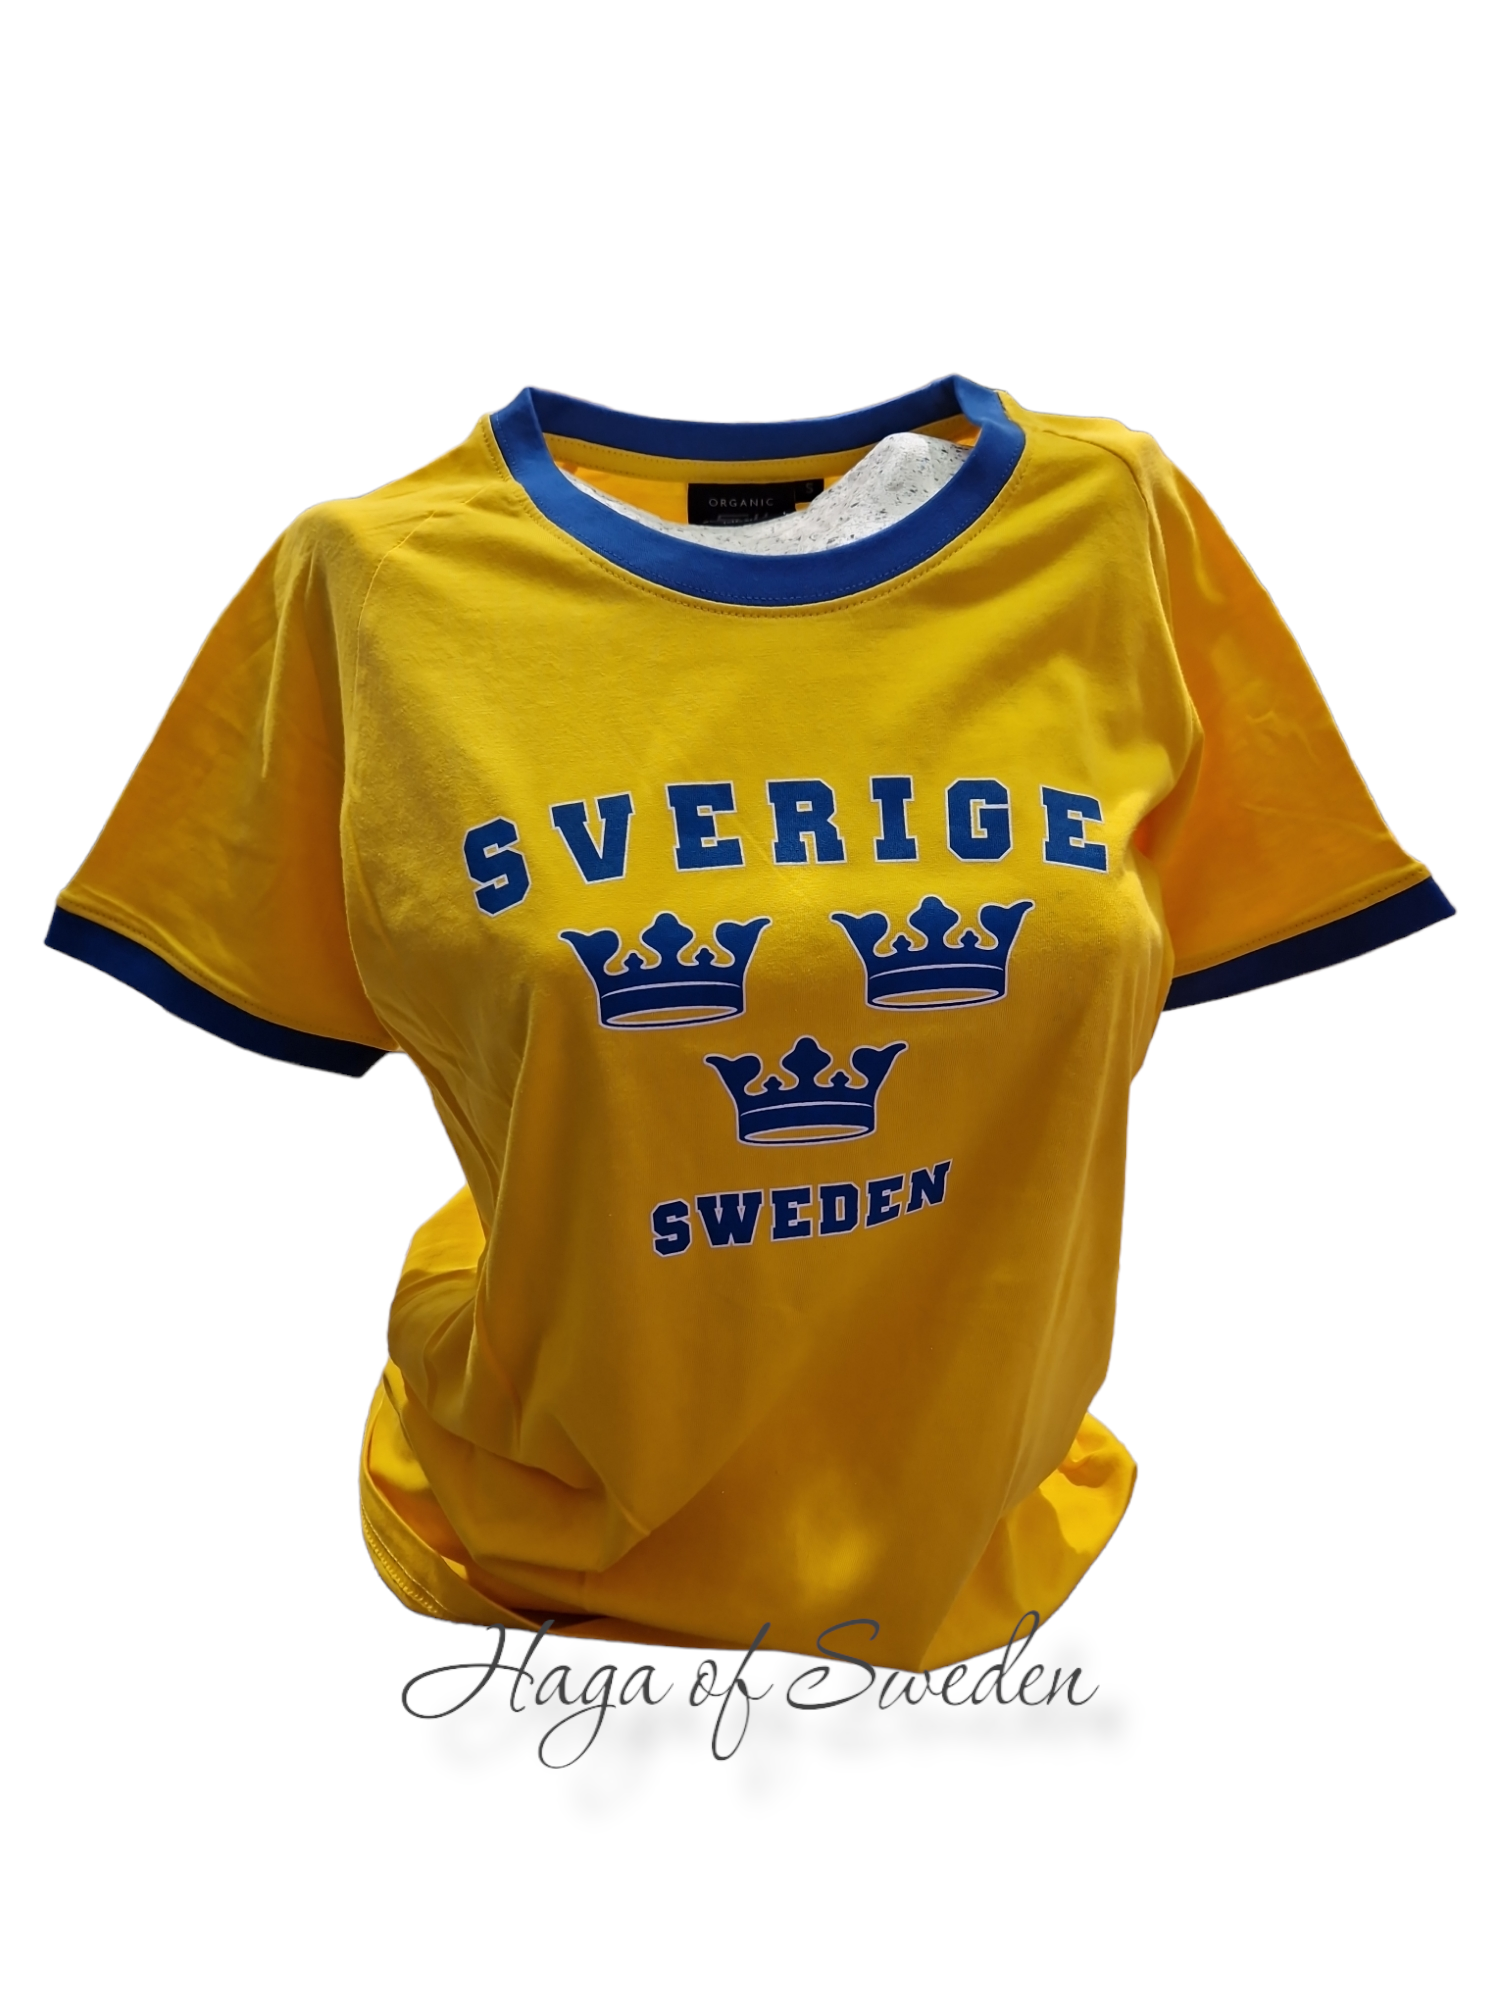 T-SHIRT Sweden yellow / blue kronor - Haga of Sweden